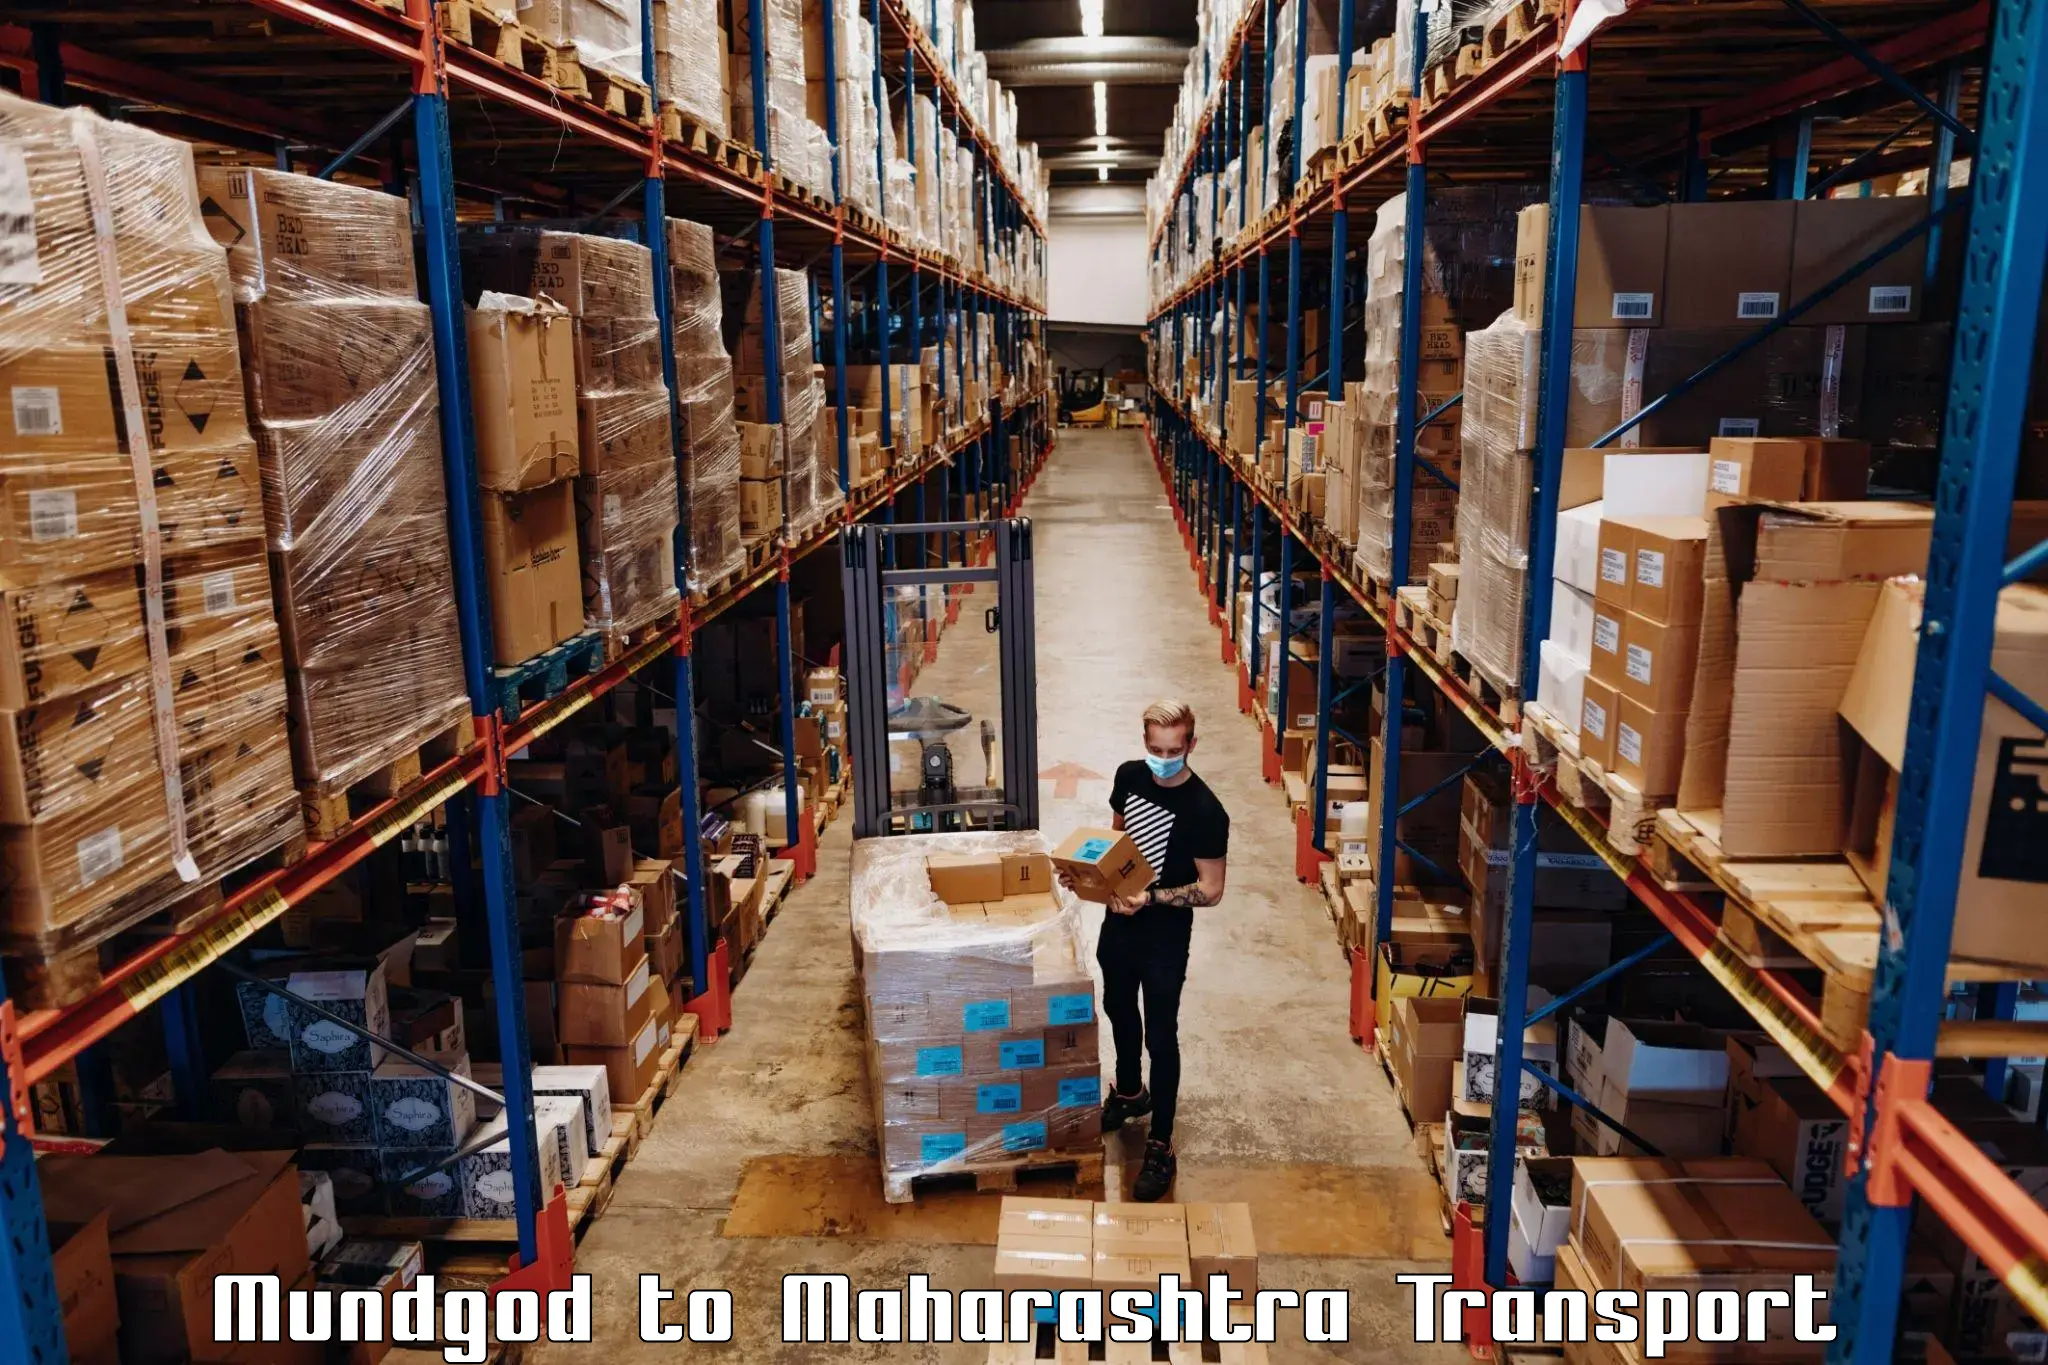 Shipping partner Mundgod to Omerga